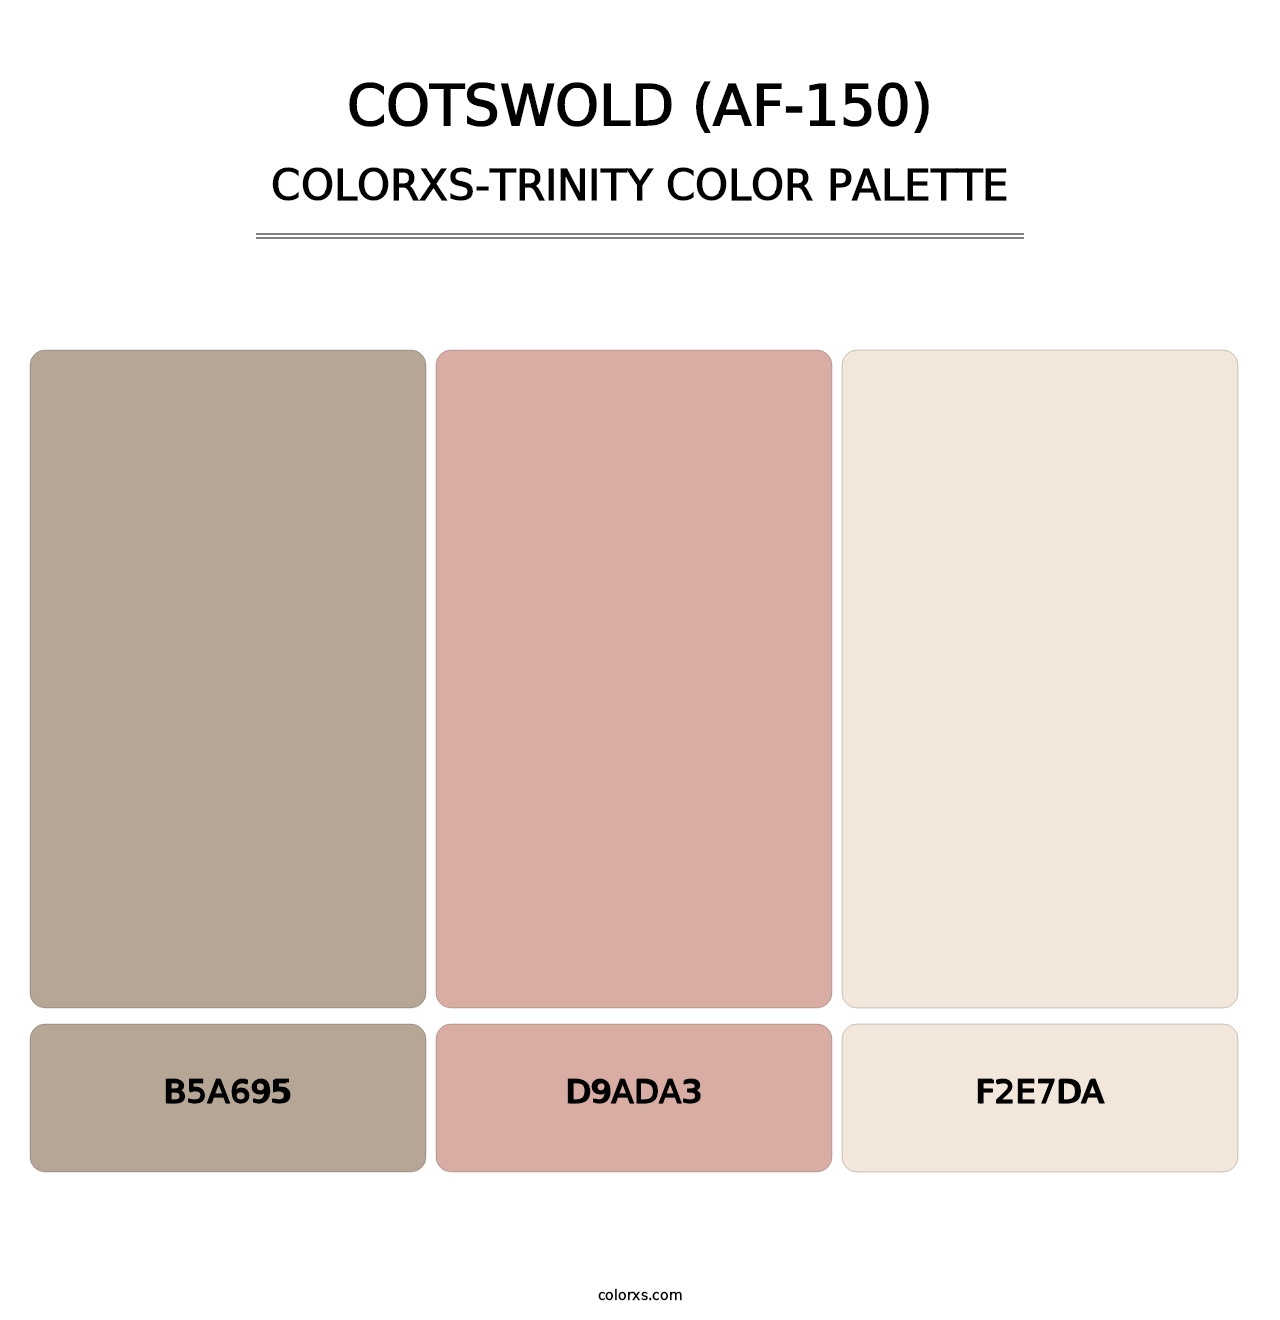 Cotswold (AF-150) - Colorxs Trinity Palette